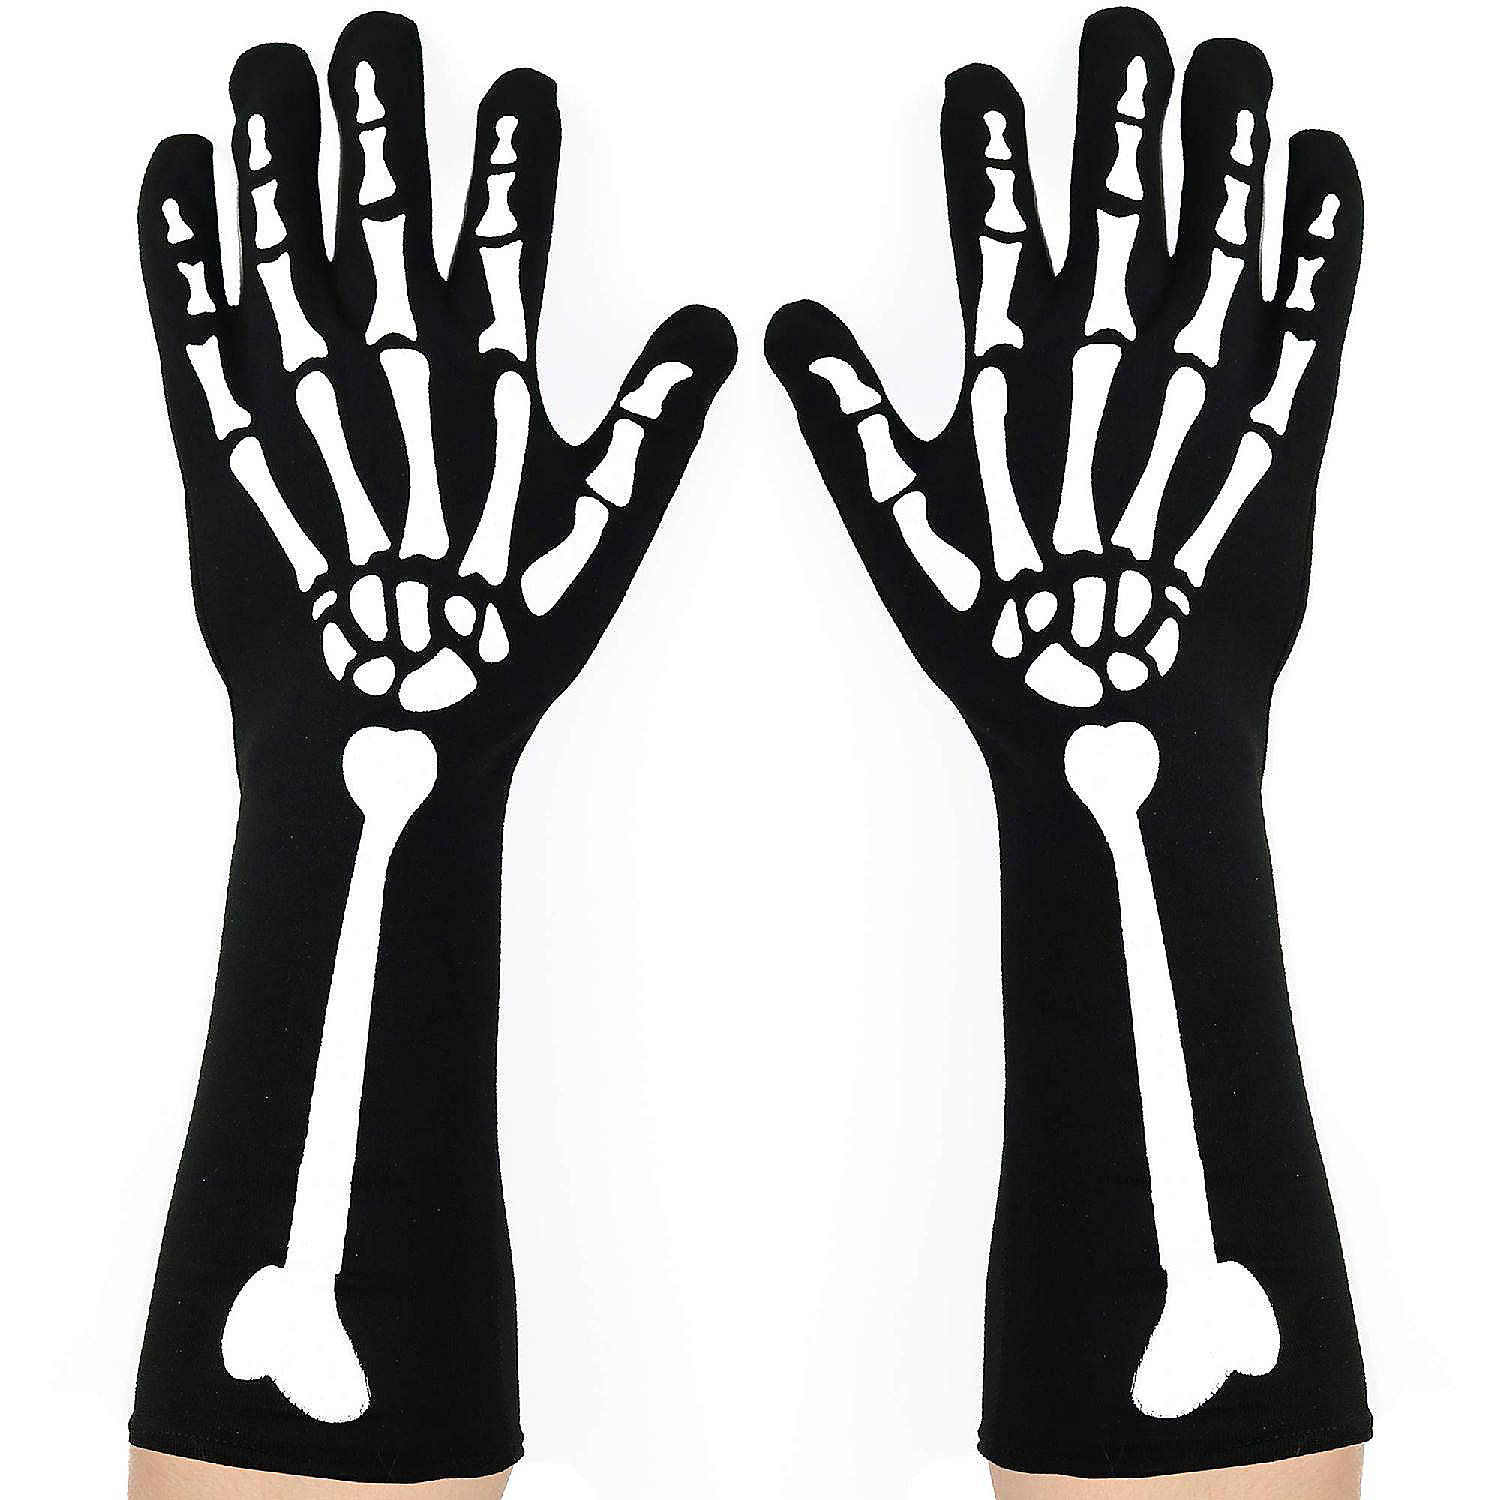 Skeleteen Bone Hand Skeleton Gloves - Skeleton Accessories Stretch ...